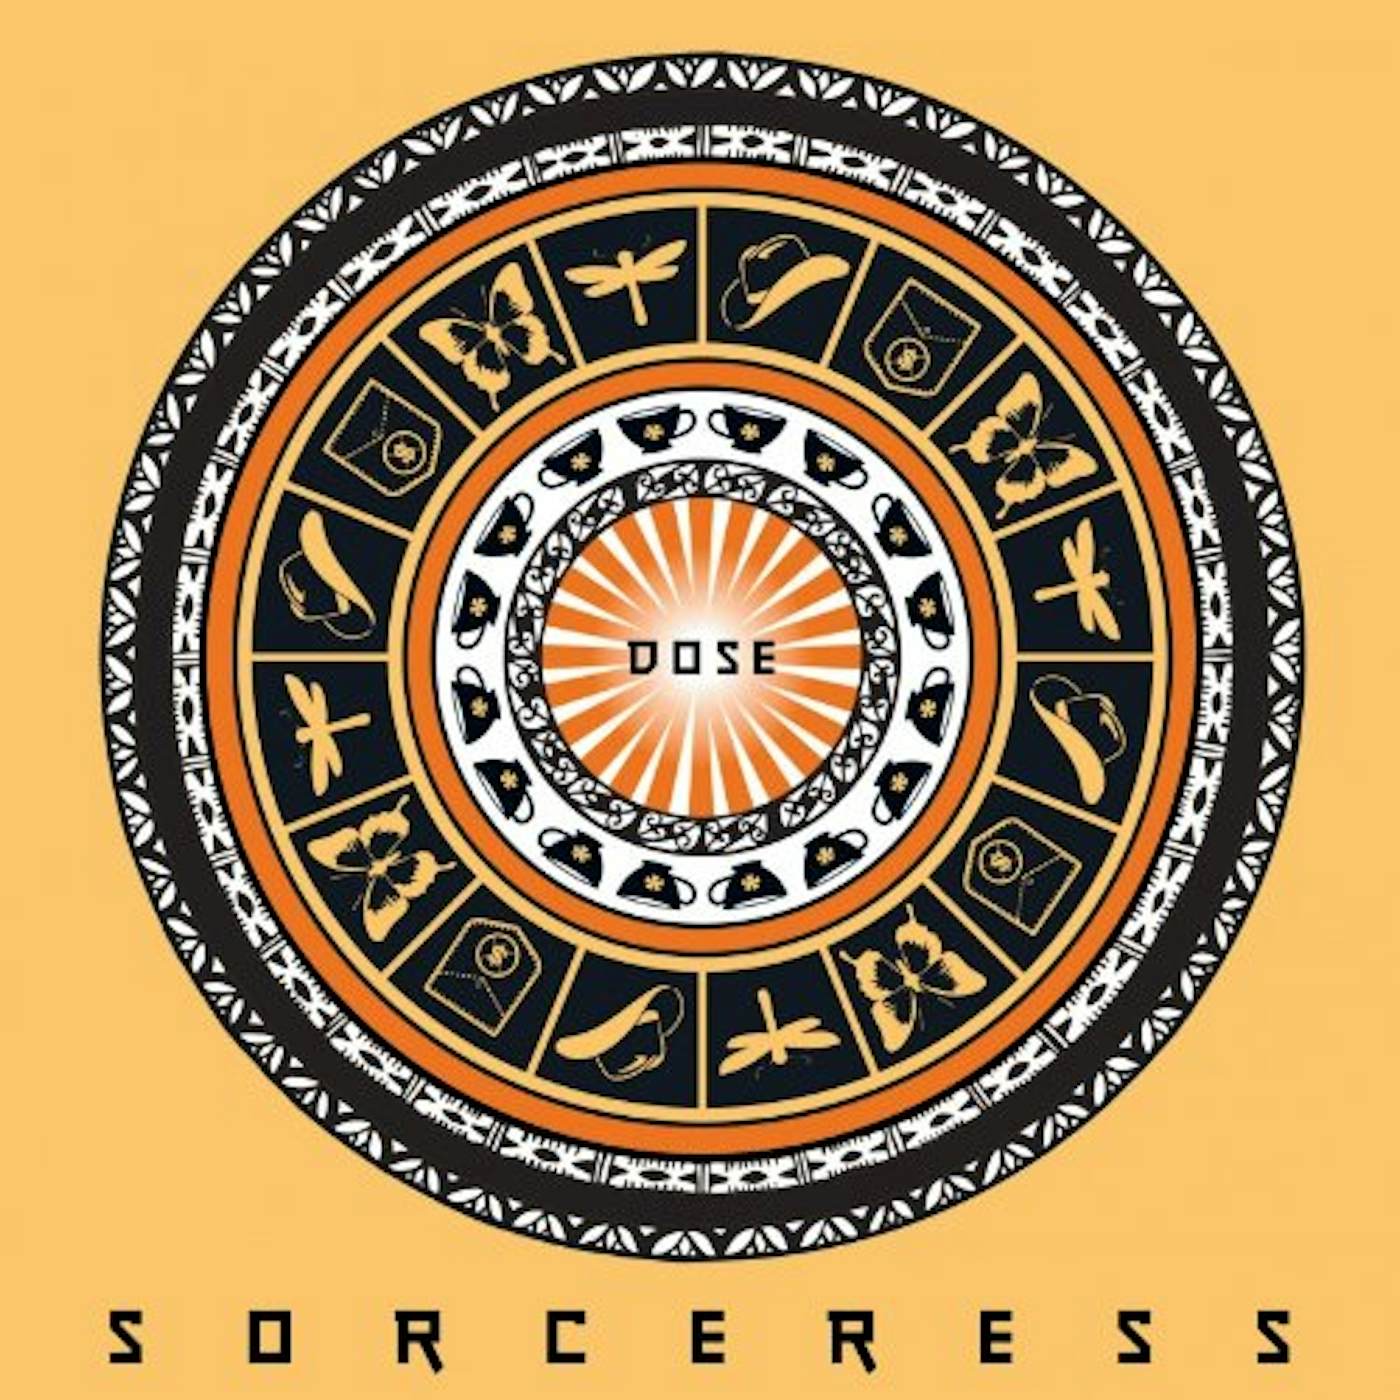 Sorceress DOSE CD